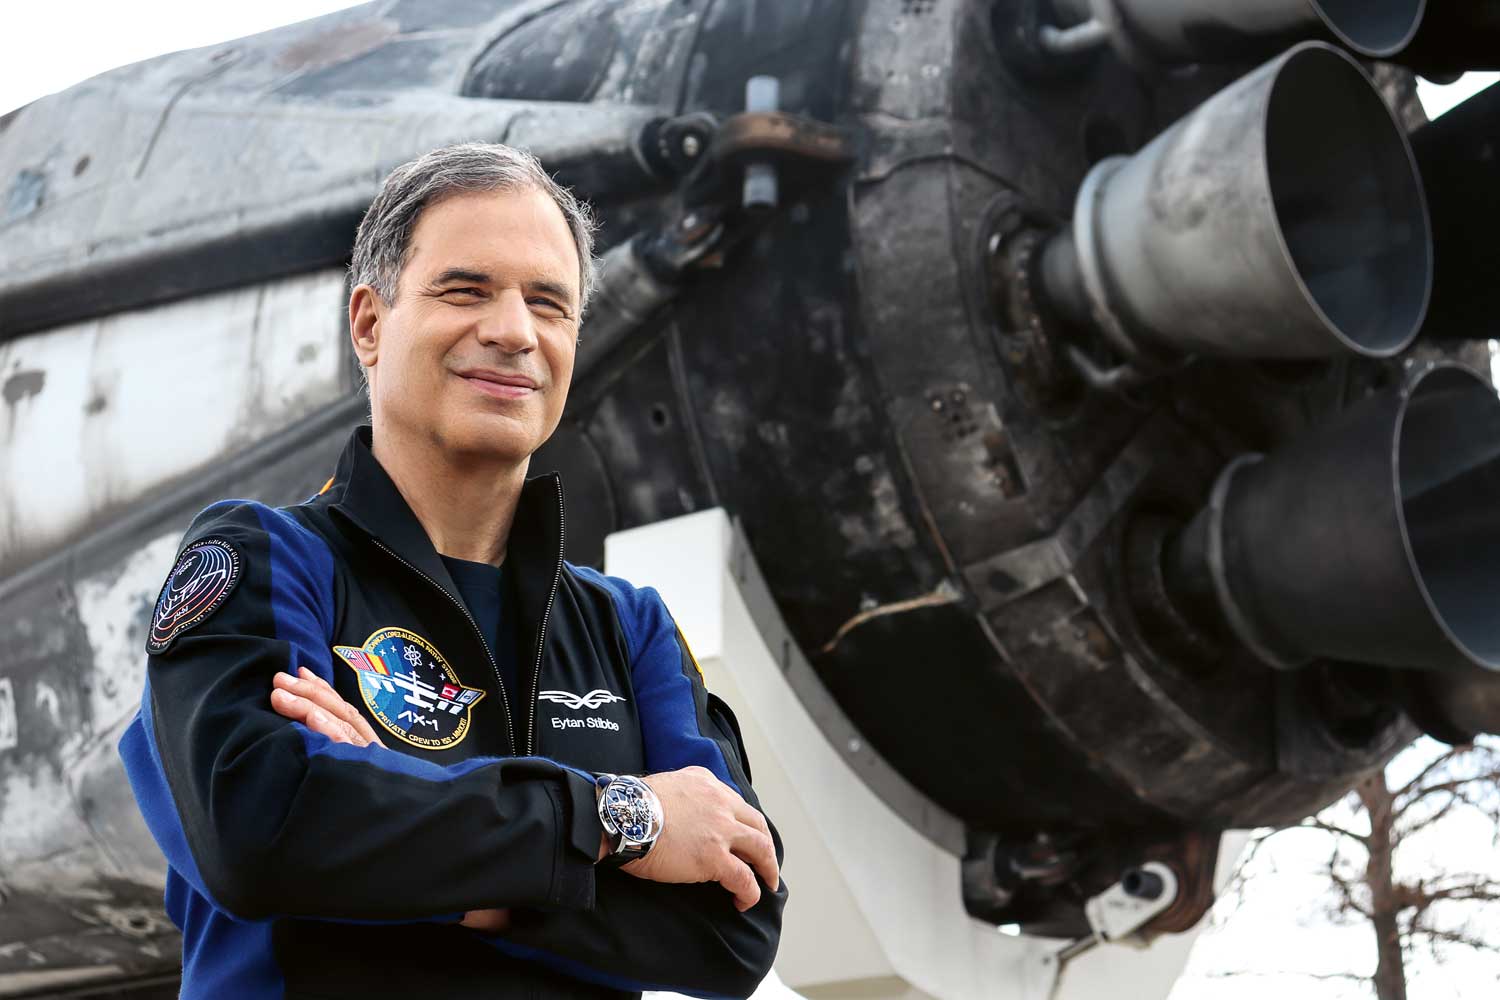 Eytan Stibbe, an Israeli-born impact investor, philanthropist and former fighter pilot, wore the Astronomia Tourbillon Bucherer Blue to space